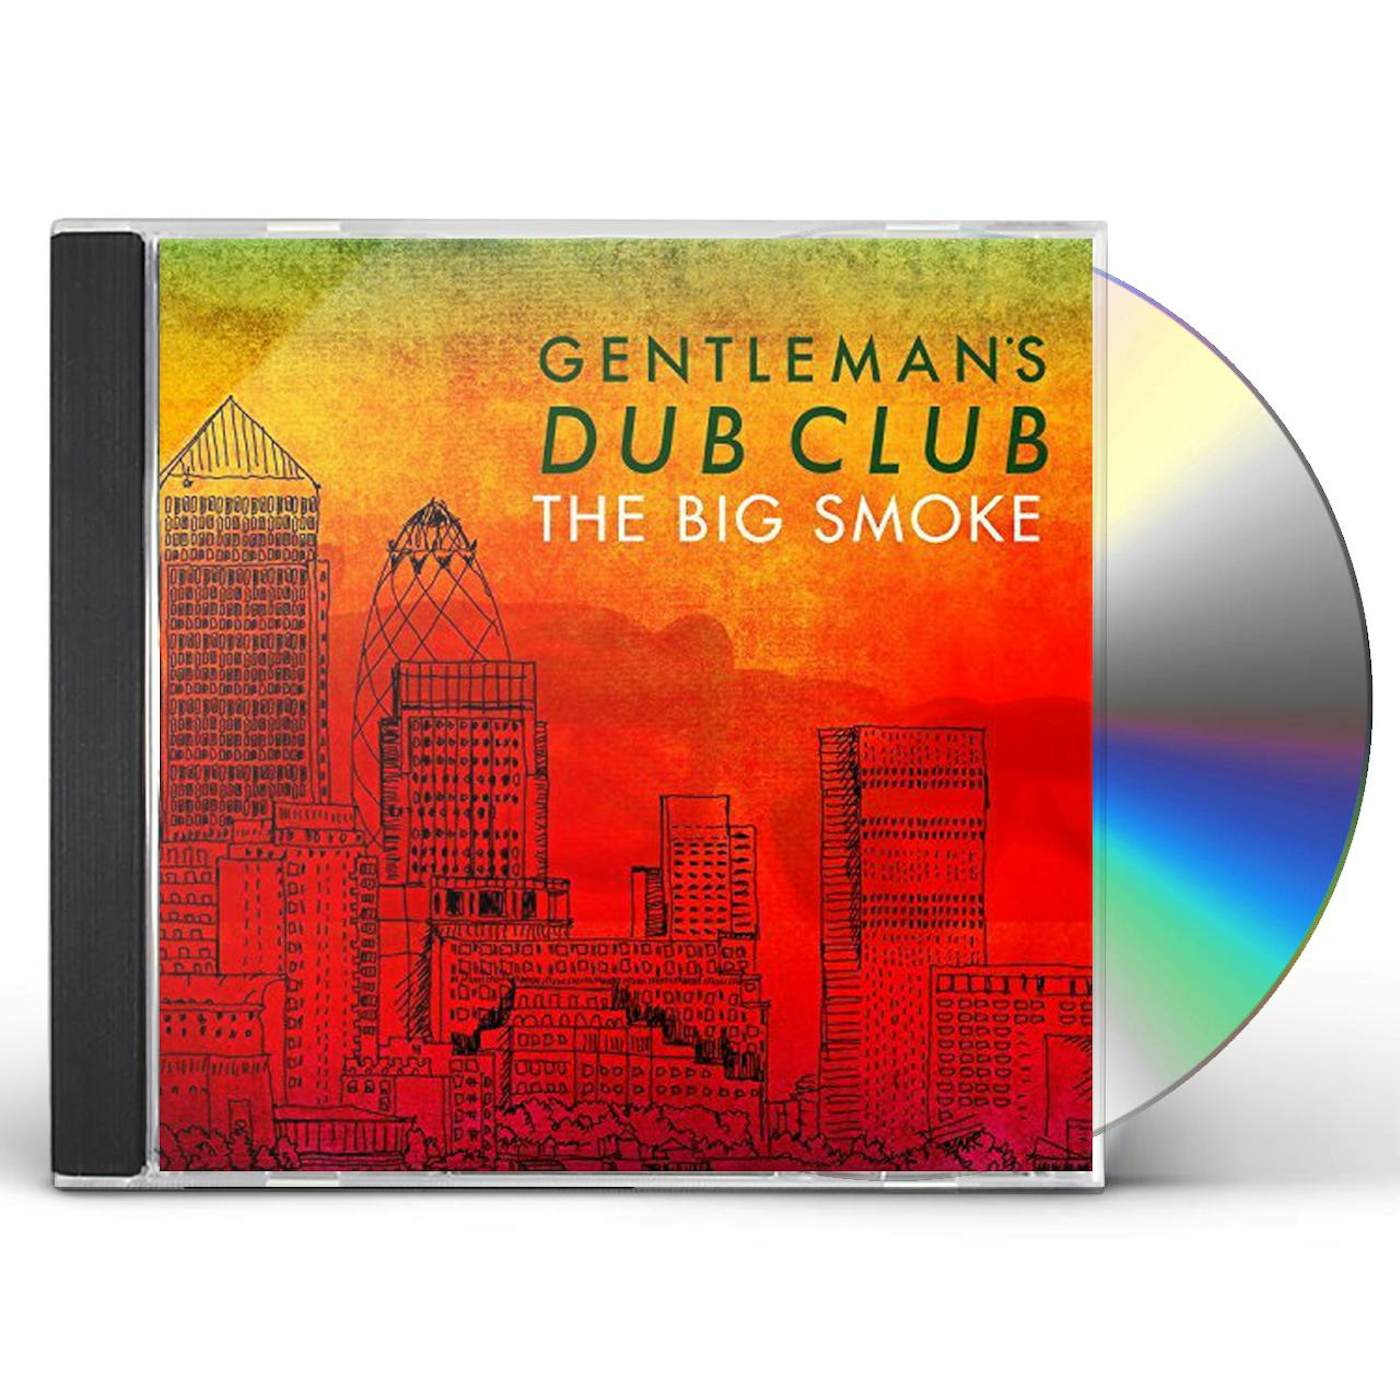 Gentleman's Dub Club BIG SMOKE CD